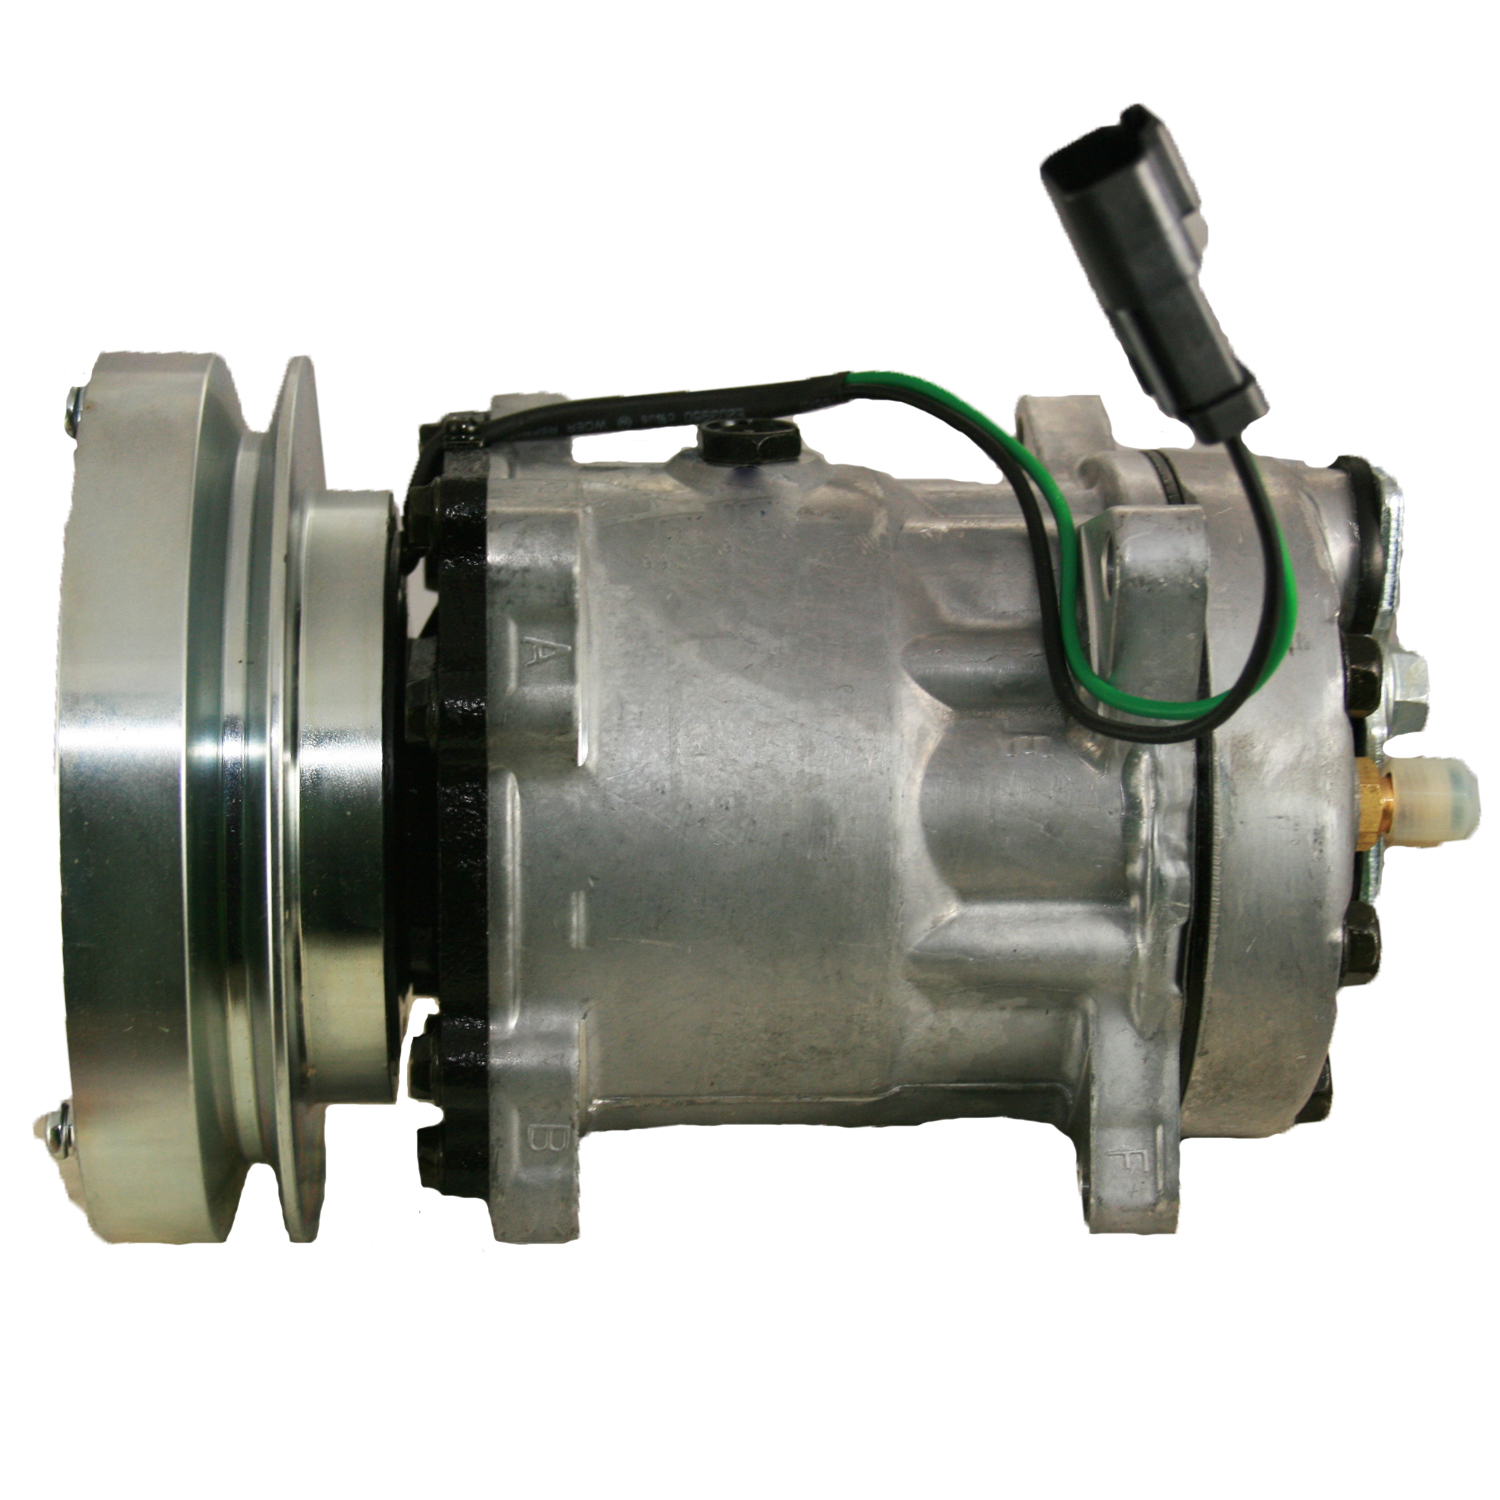 TCW Compressor 40573.104NEW New Product Image field_60b6a13a6e67c